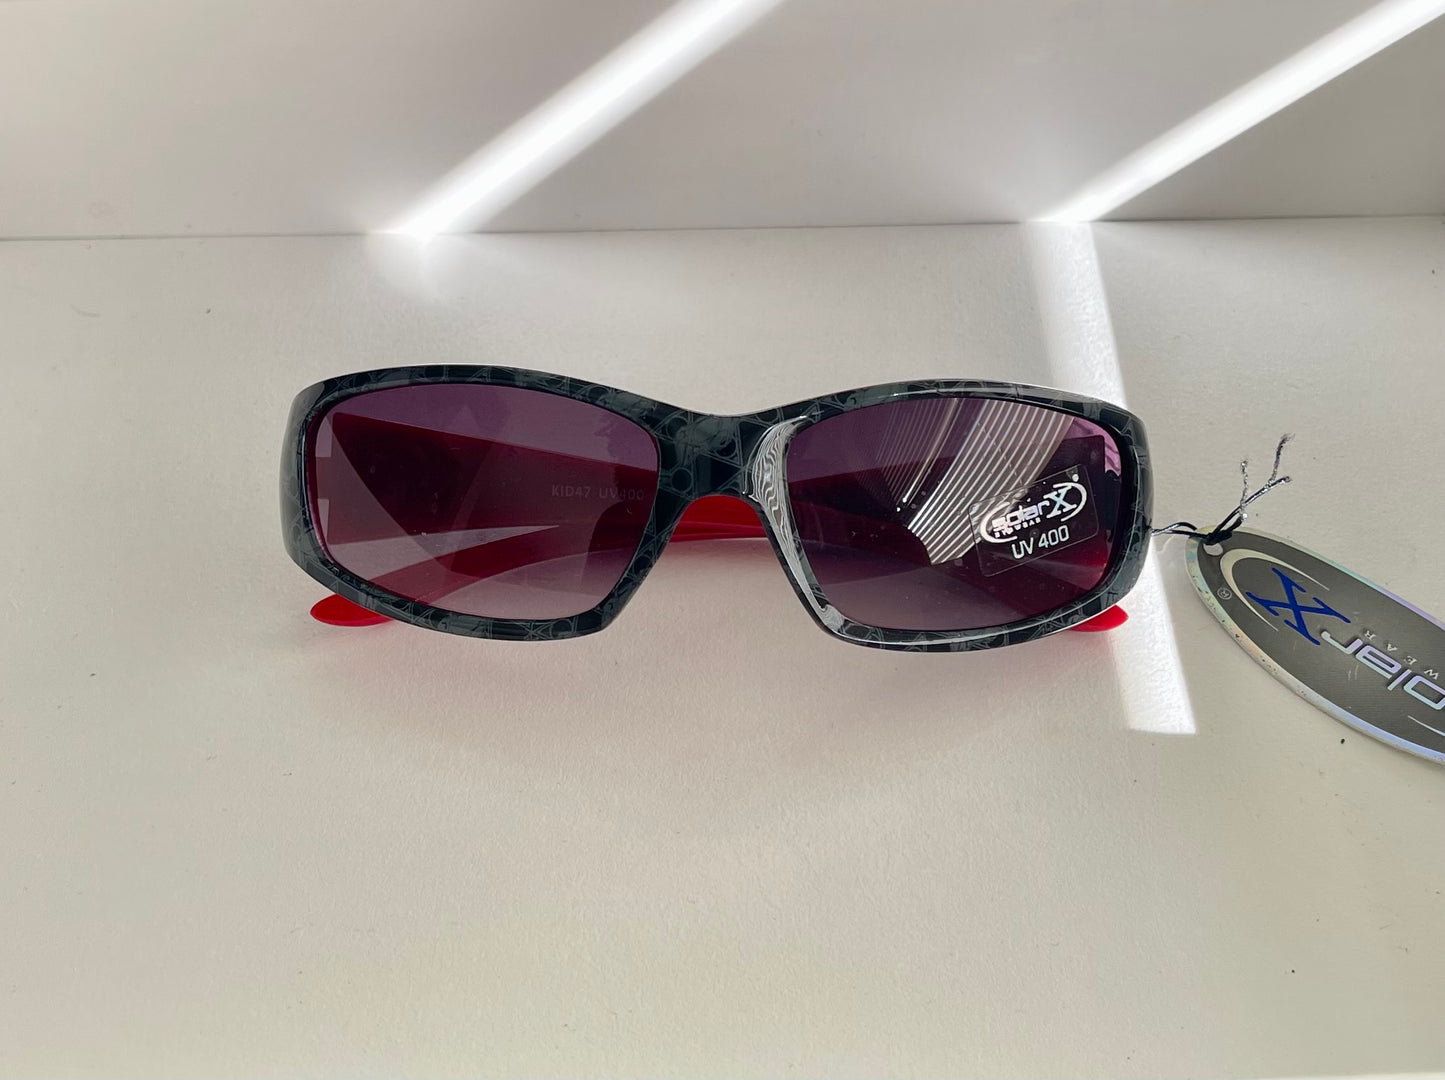 Sunglasses 0317 red